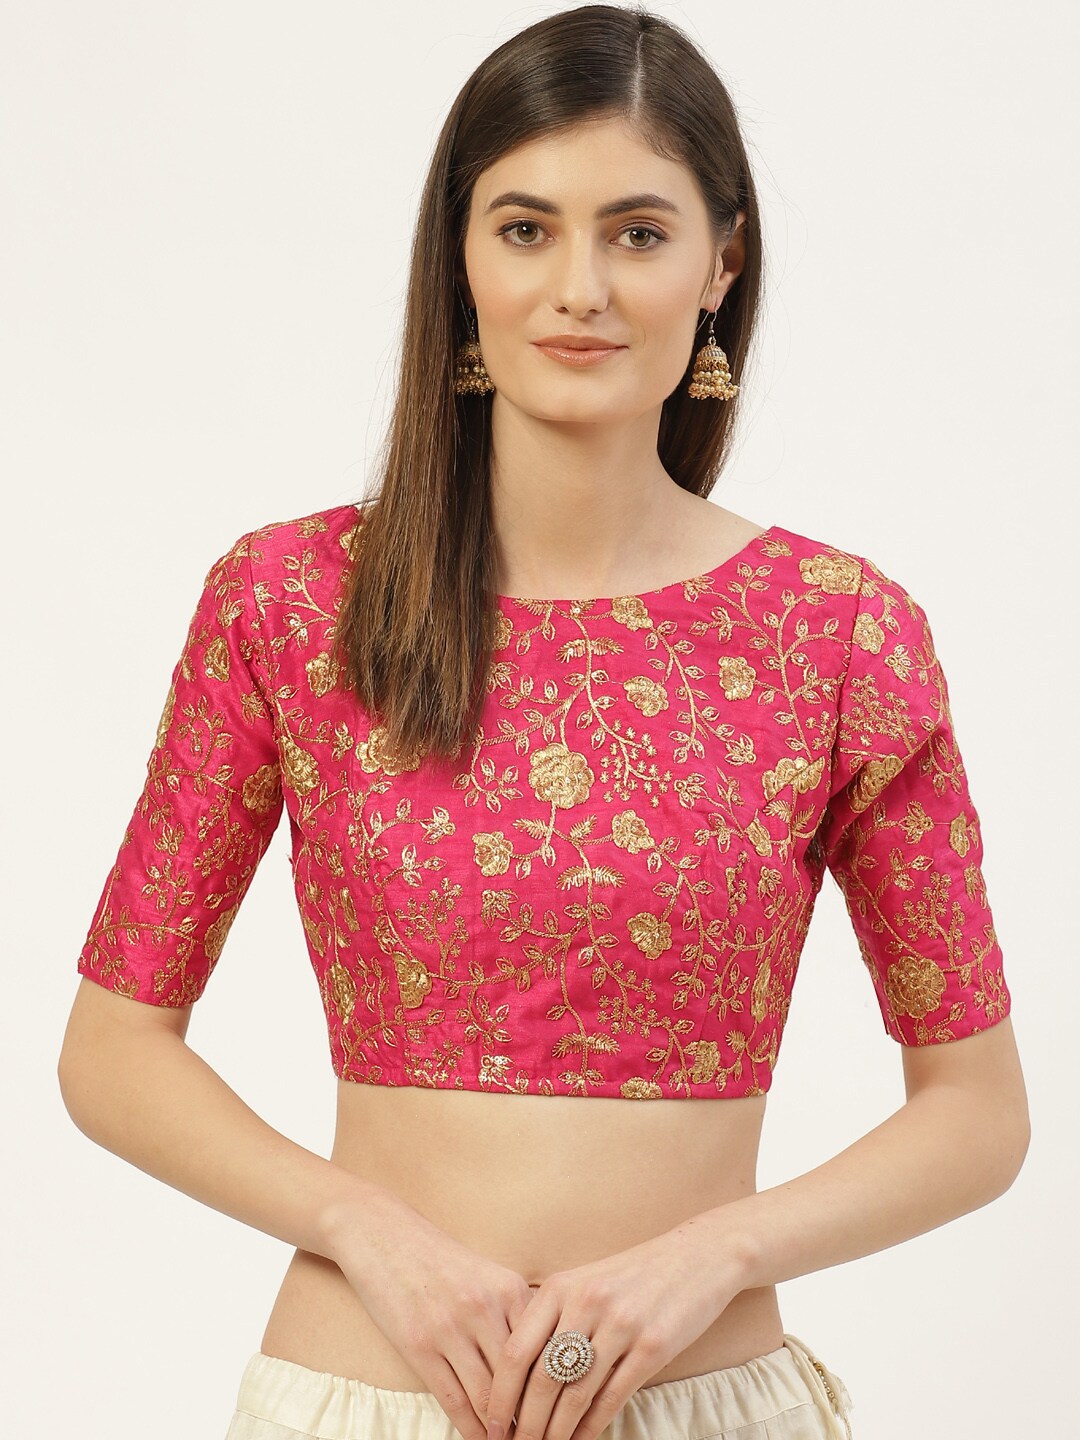 Studio Shringaar Pink & Golden Zari Embroidered Saree Blouse Price in India